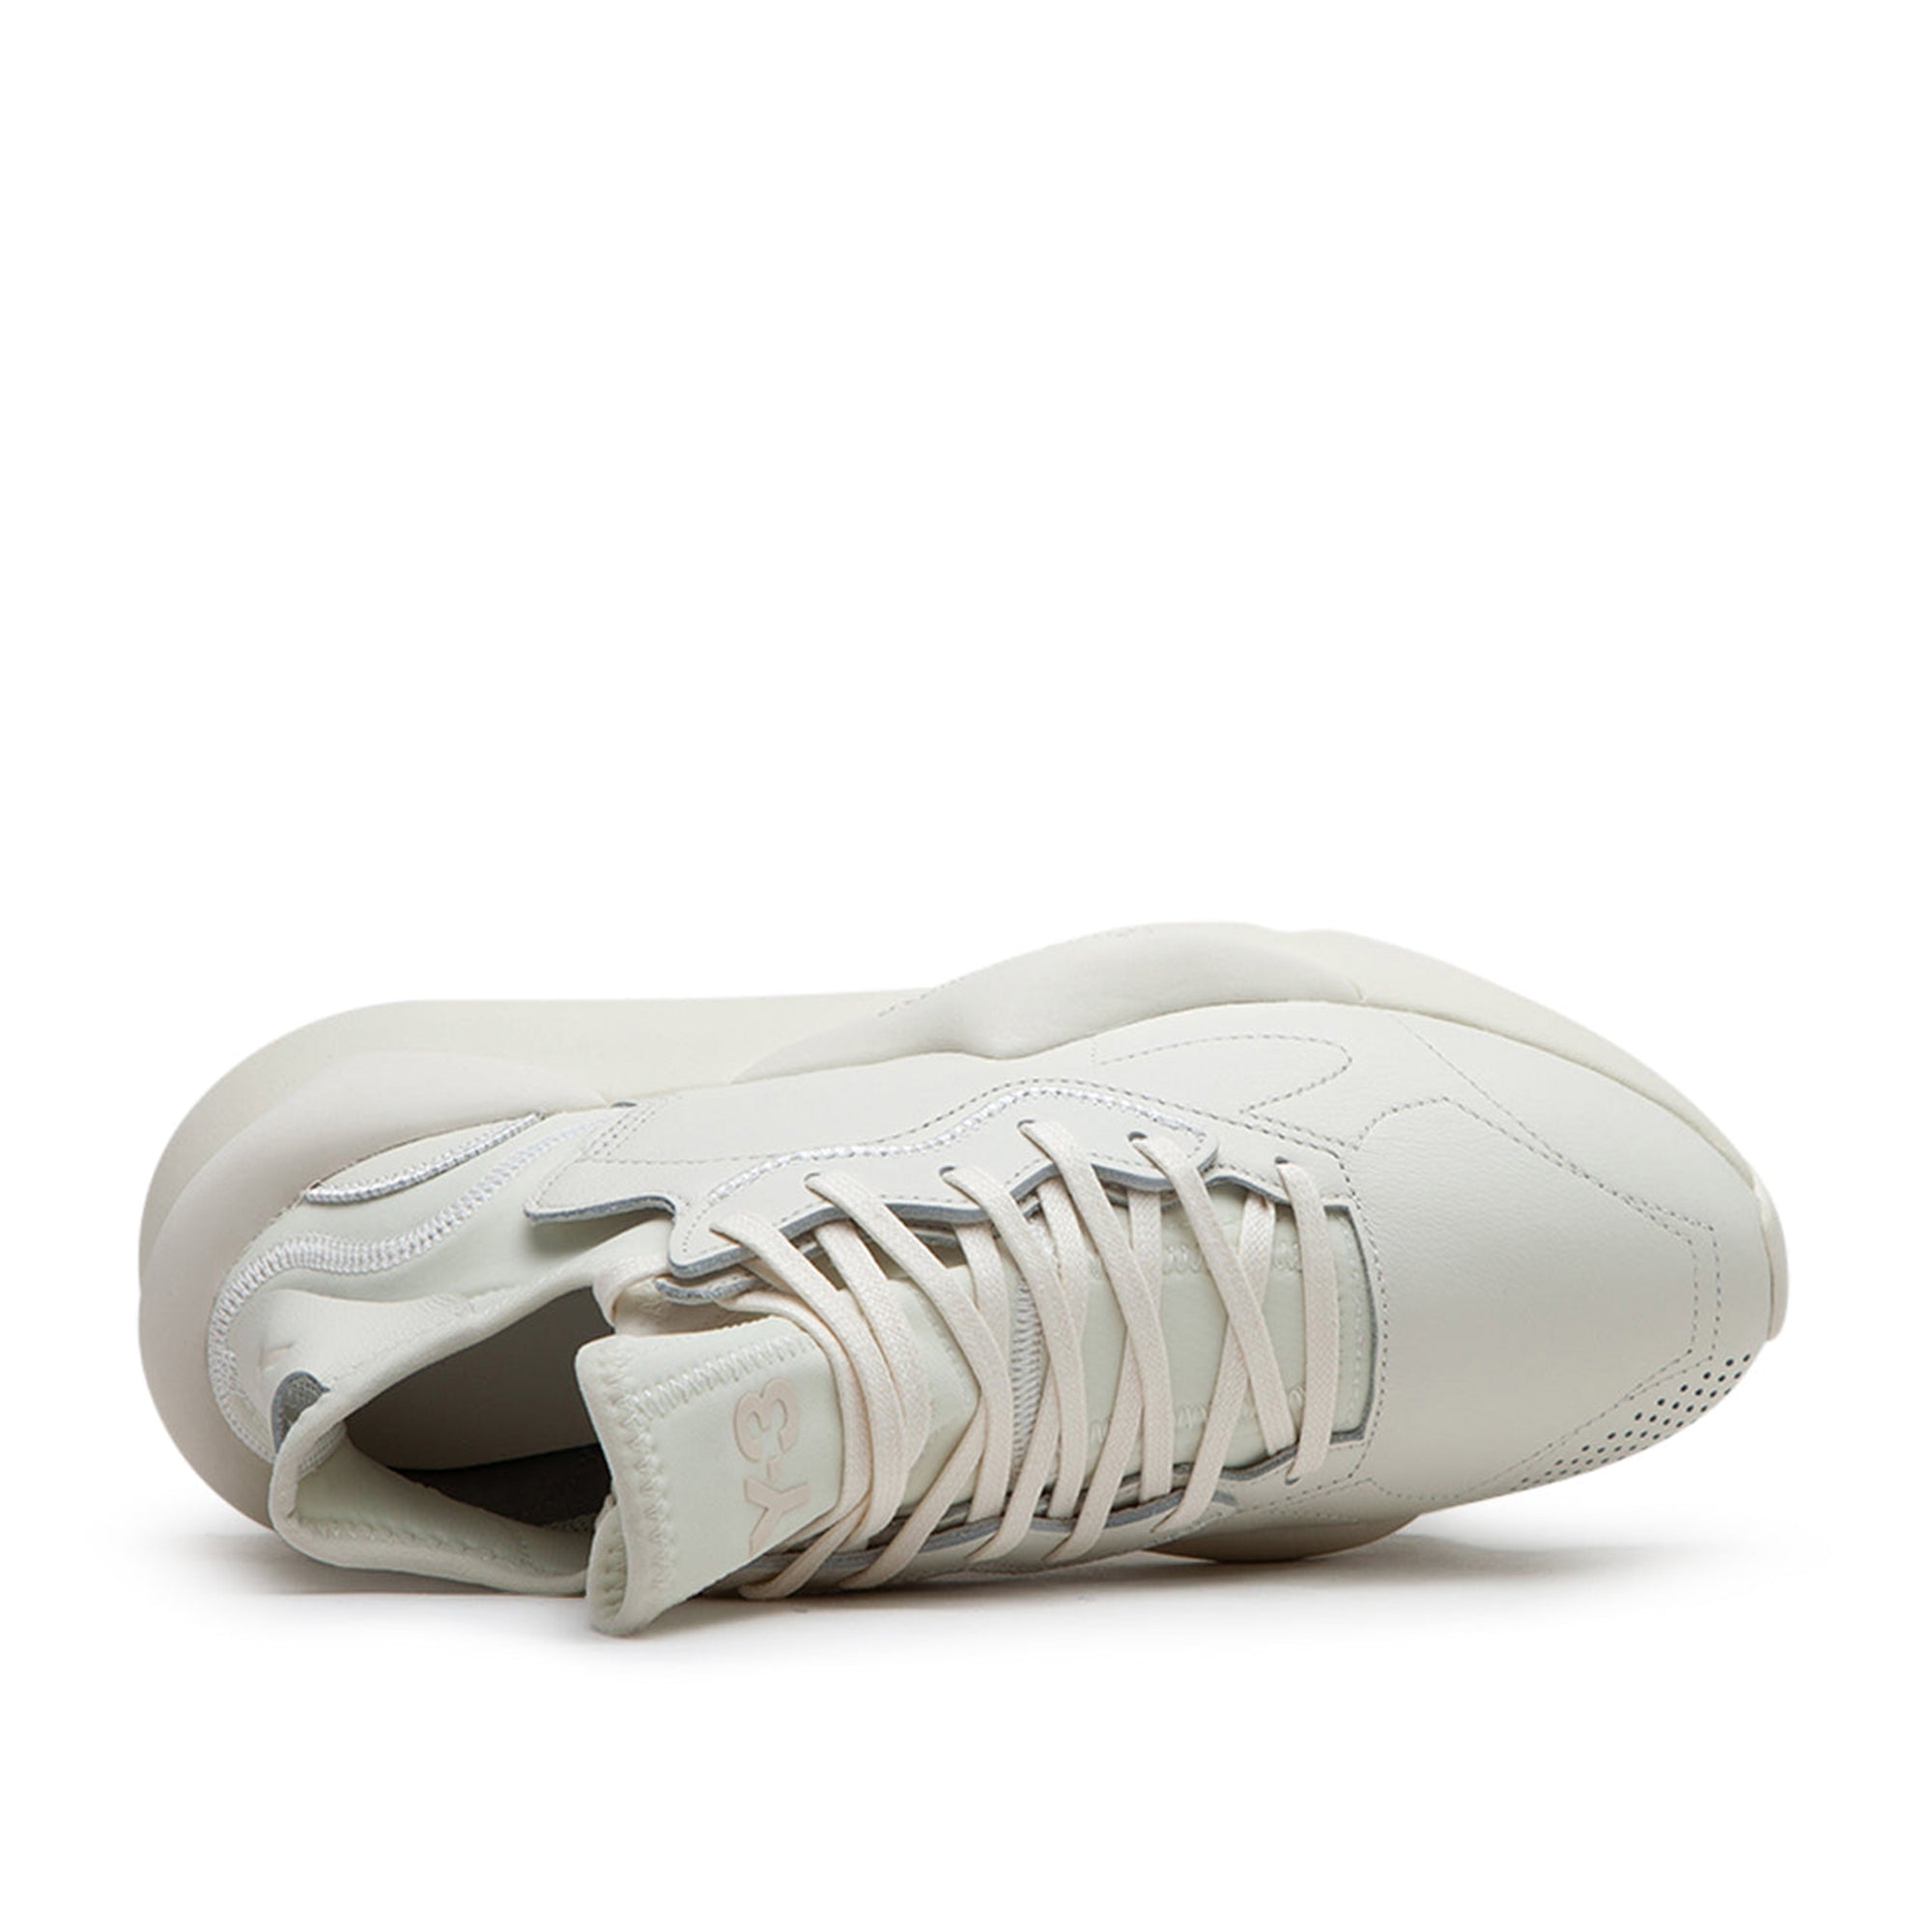 Y-3 Mens Kaiwa Sneakers White UK 9